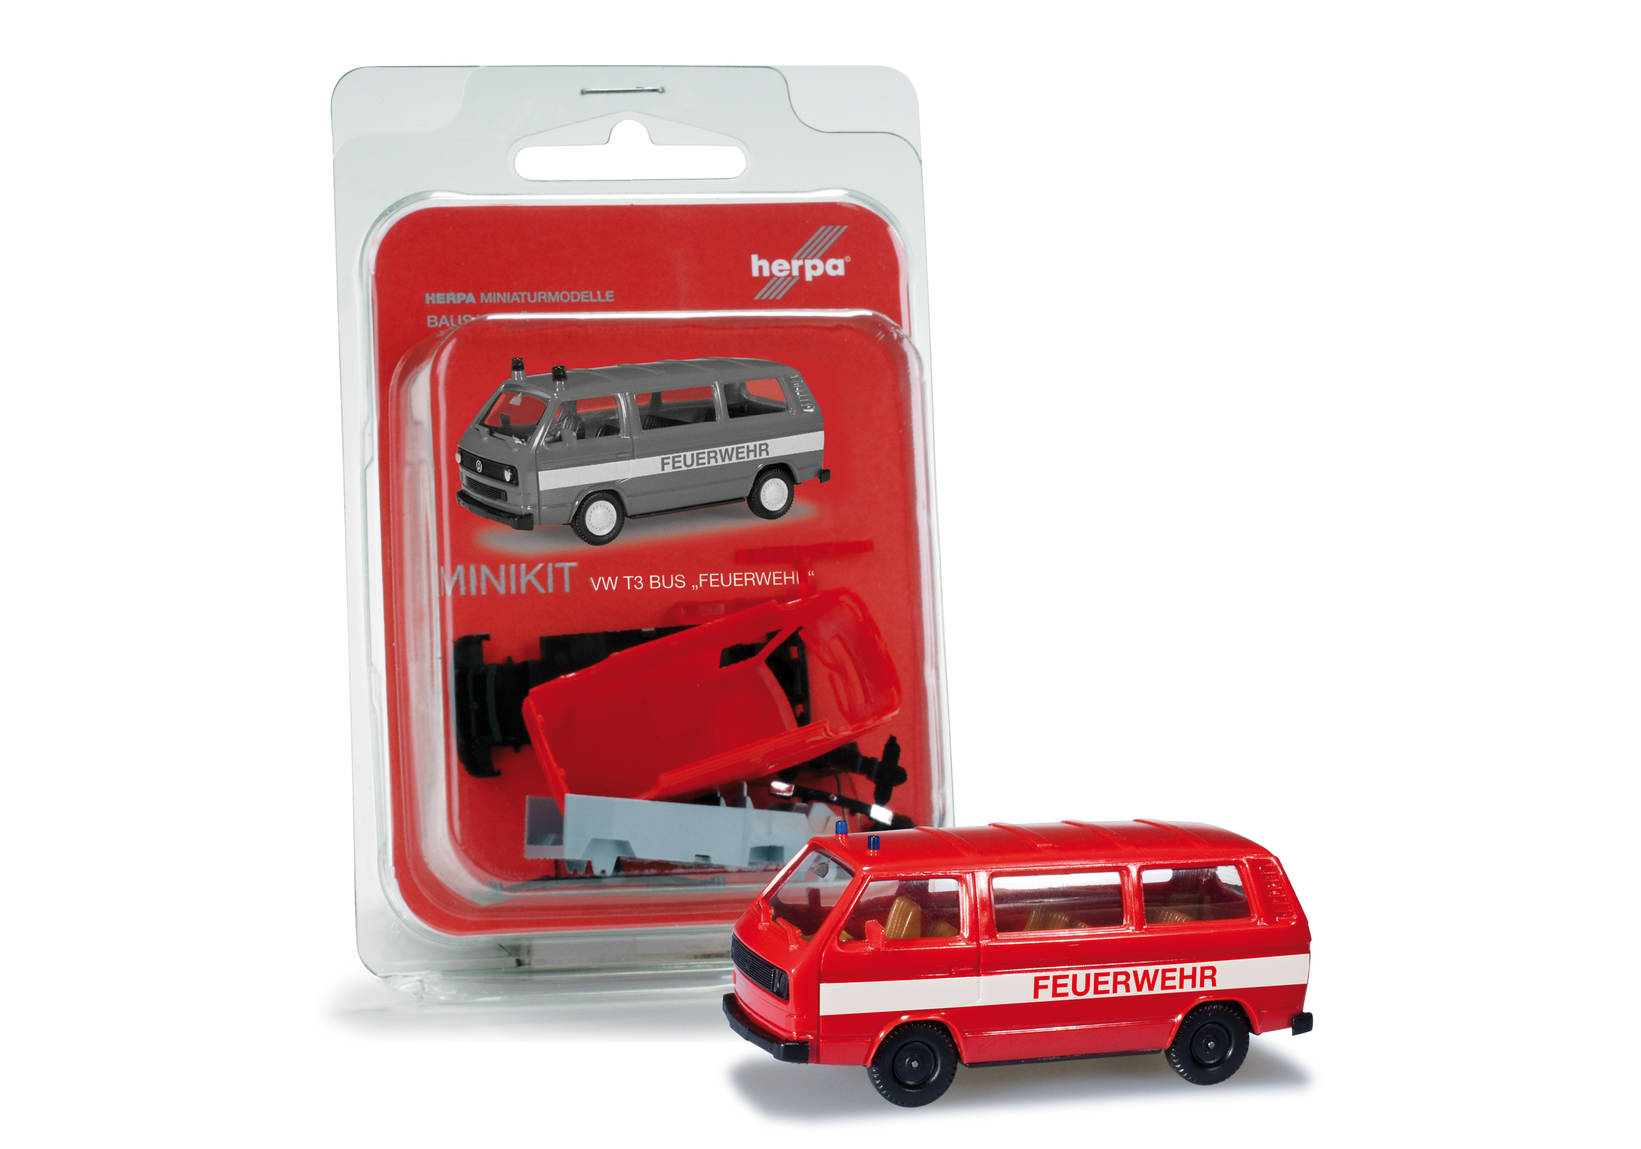 Herpa MiniKit: Volkswagen (VW) T3 Bus "Feuerwehr"